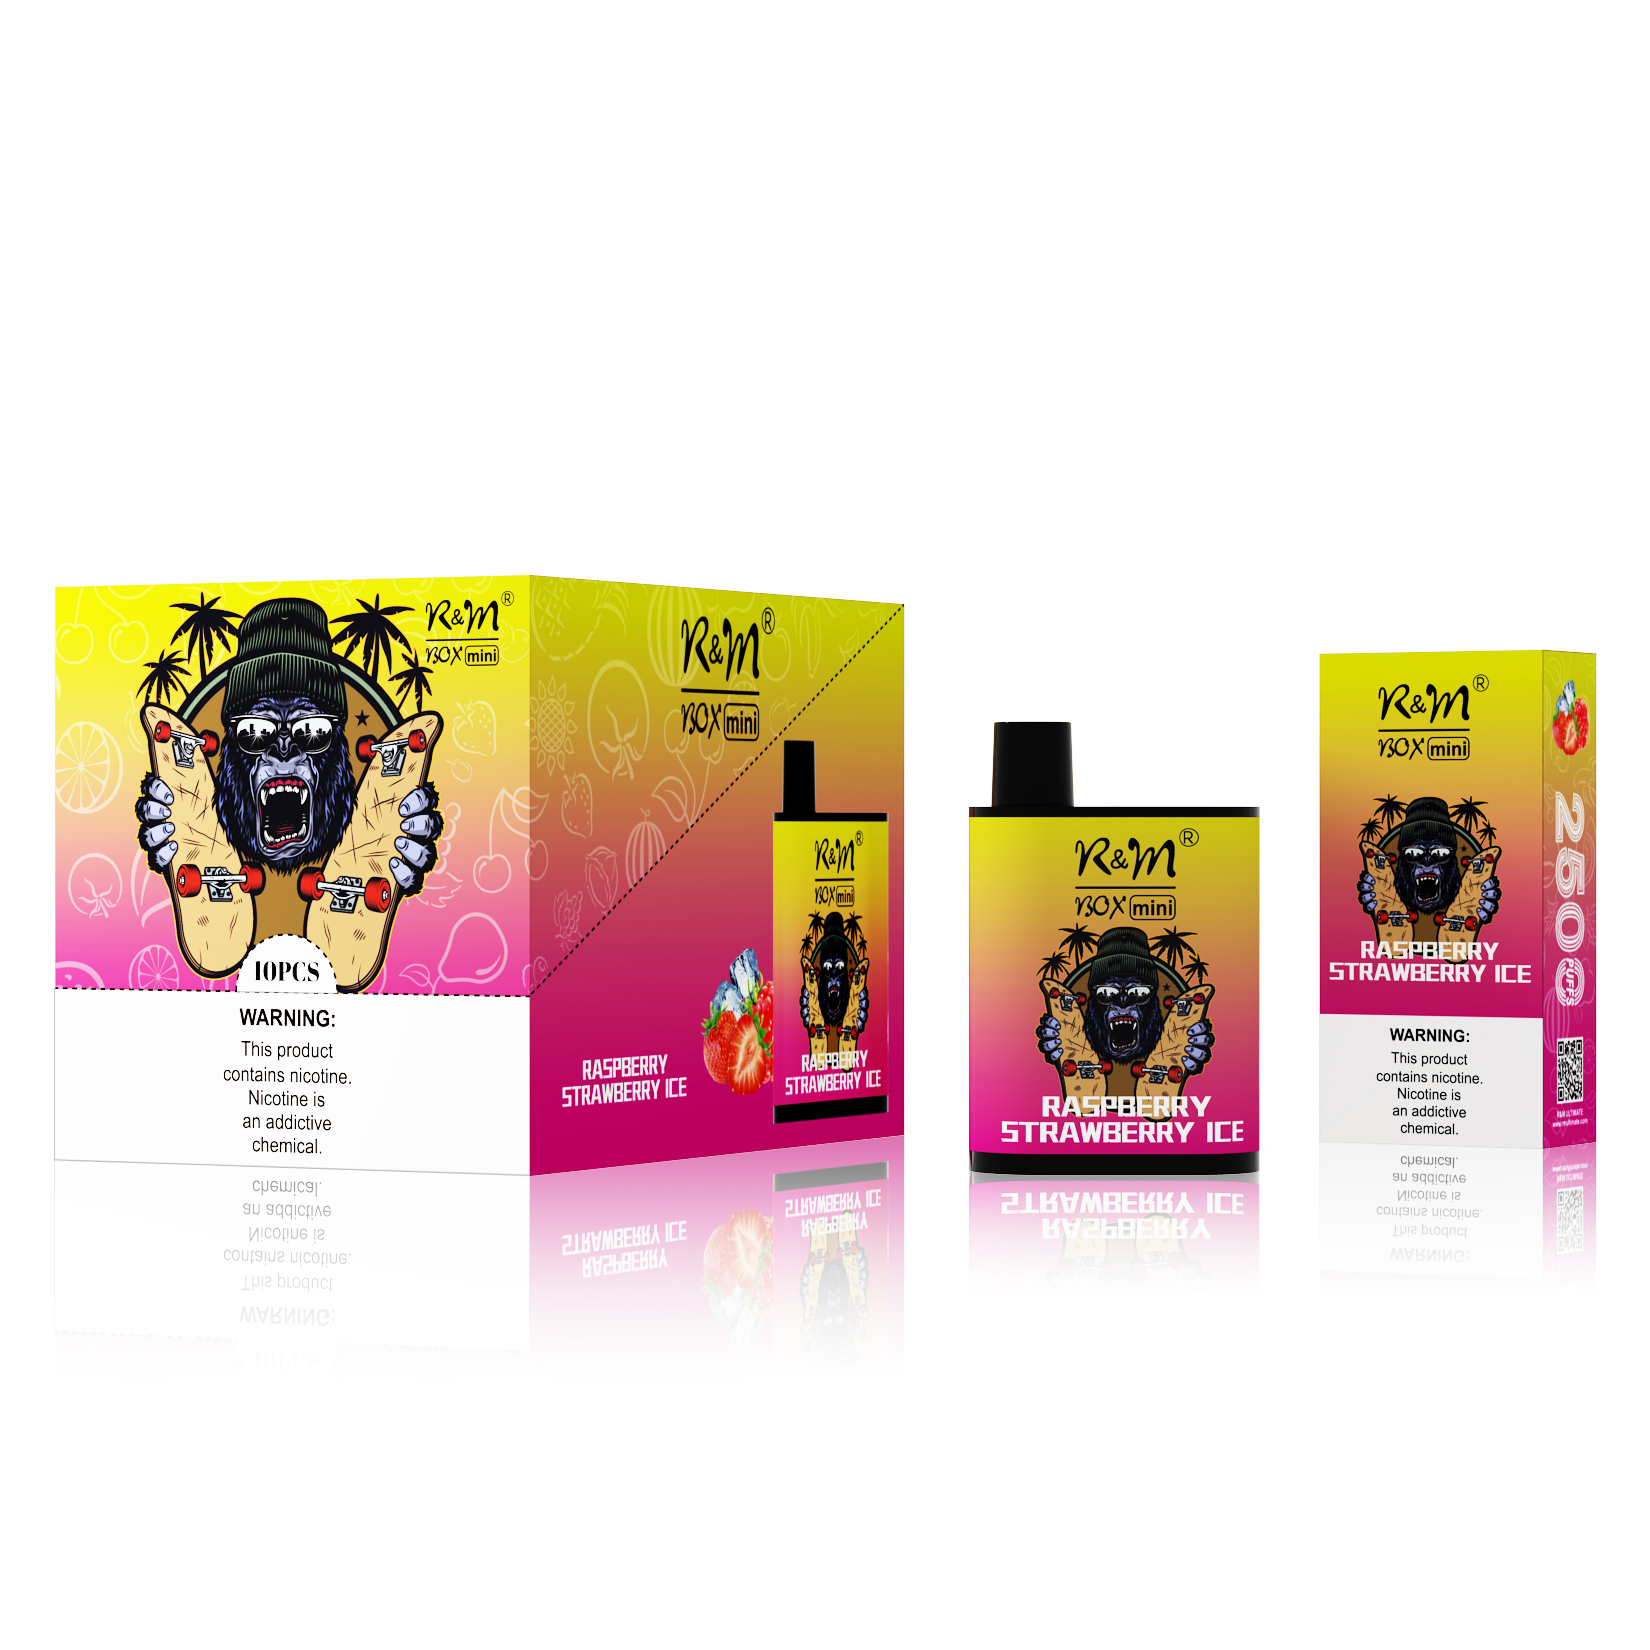 R&M Box Mini Blast Energy 3% Nicotine Vape Fournisseur | Distributeur